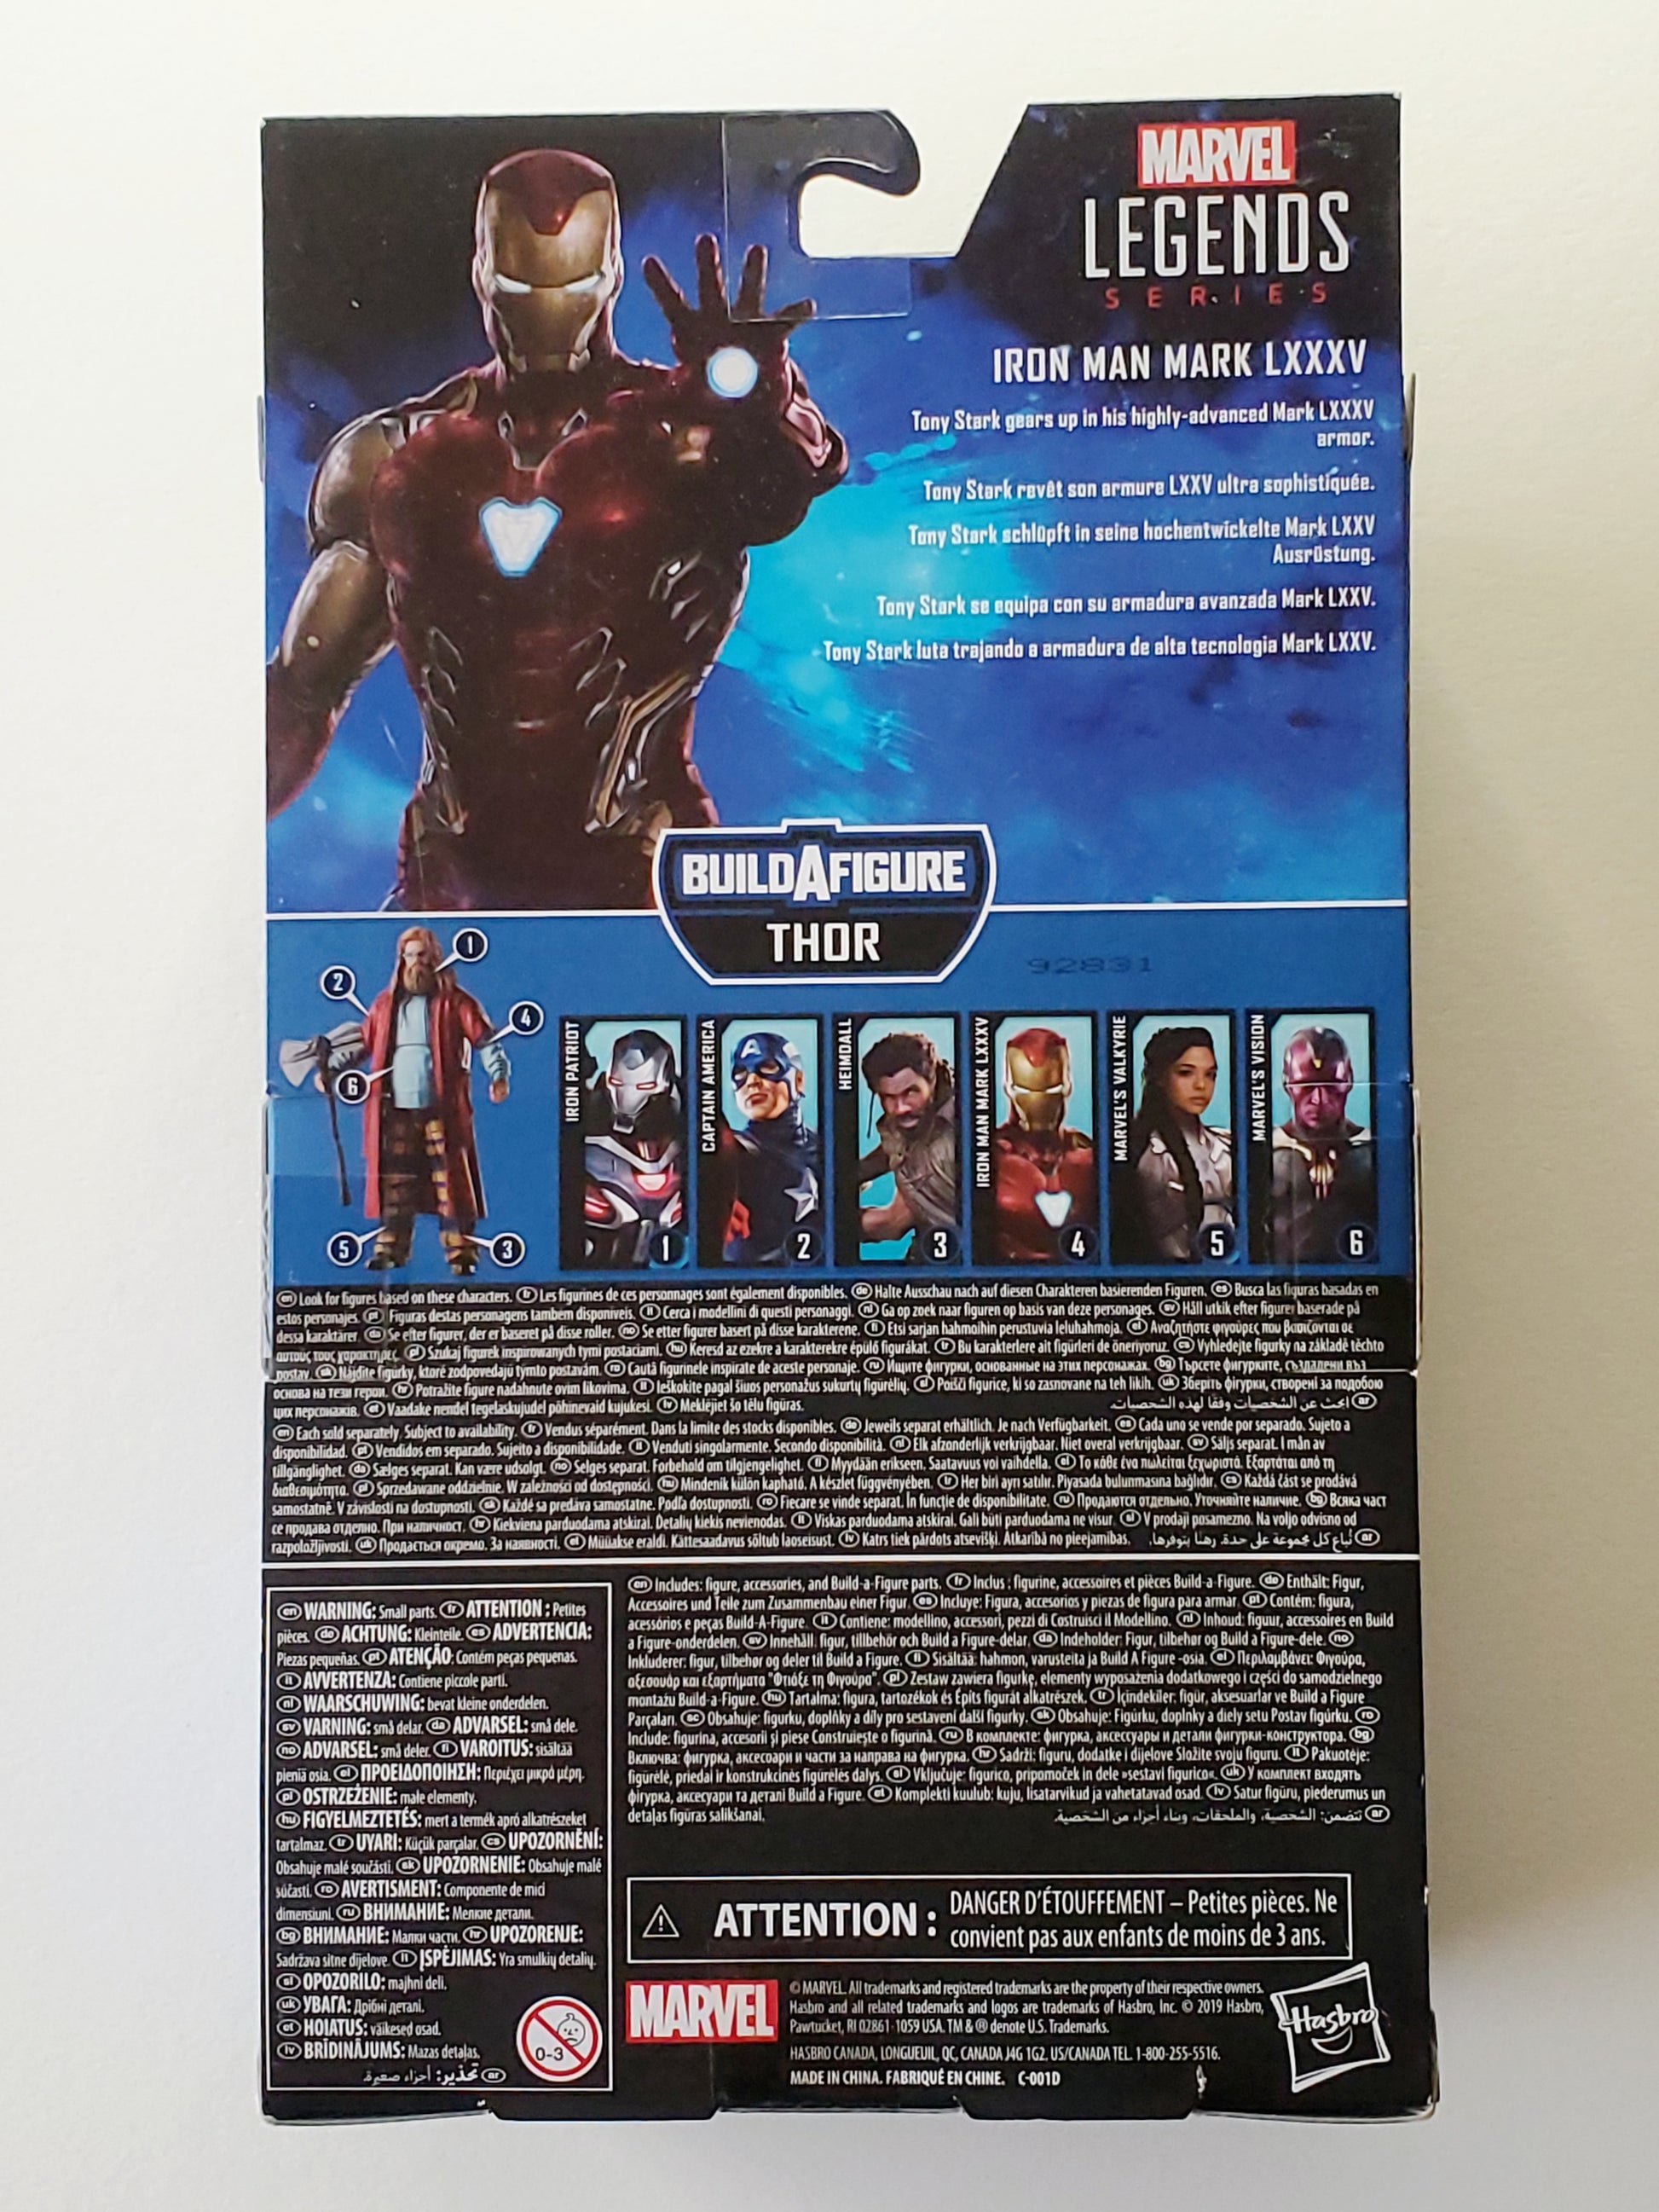 New In-Hand Images For The Marvel Legends 6 Avengers: Endgame